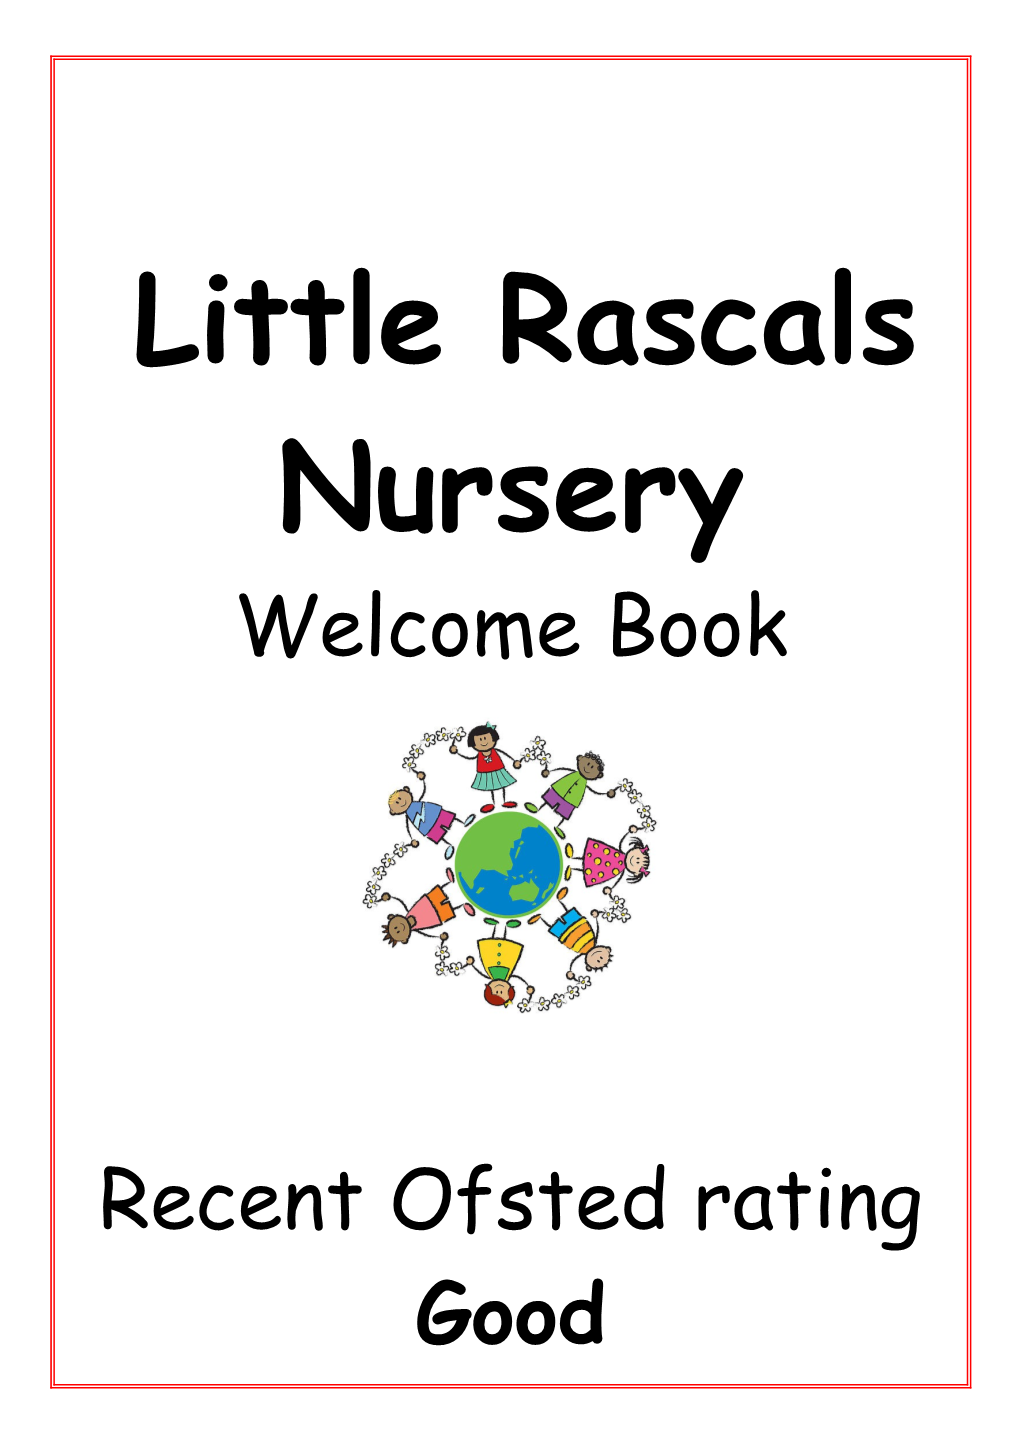 Little Rascals Day Nursery